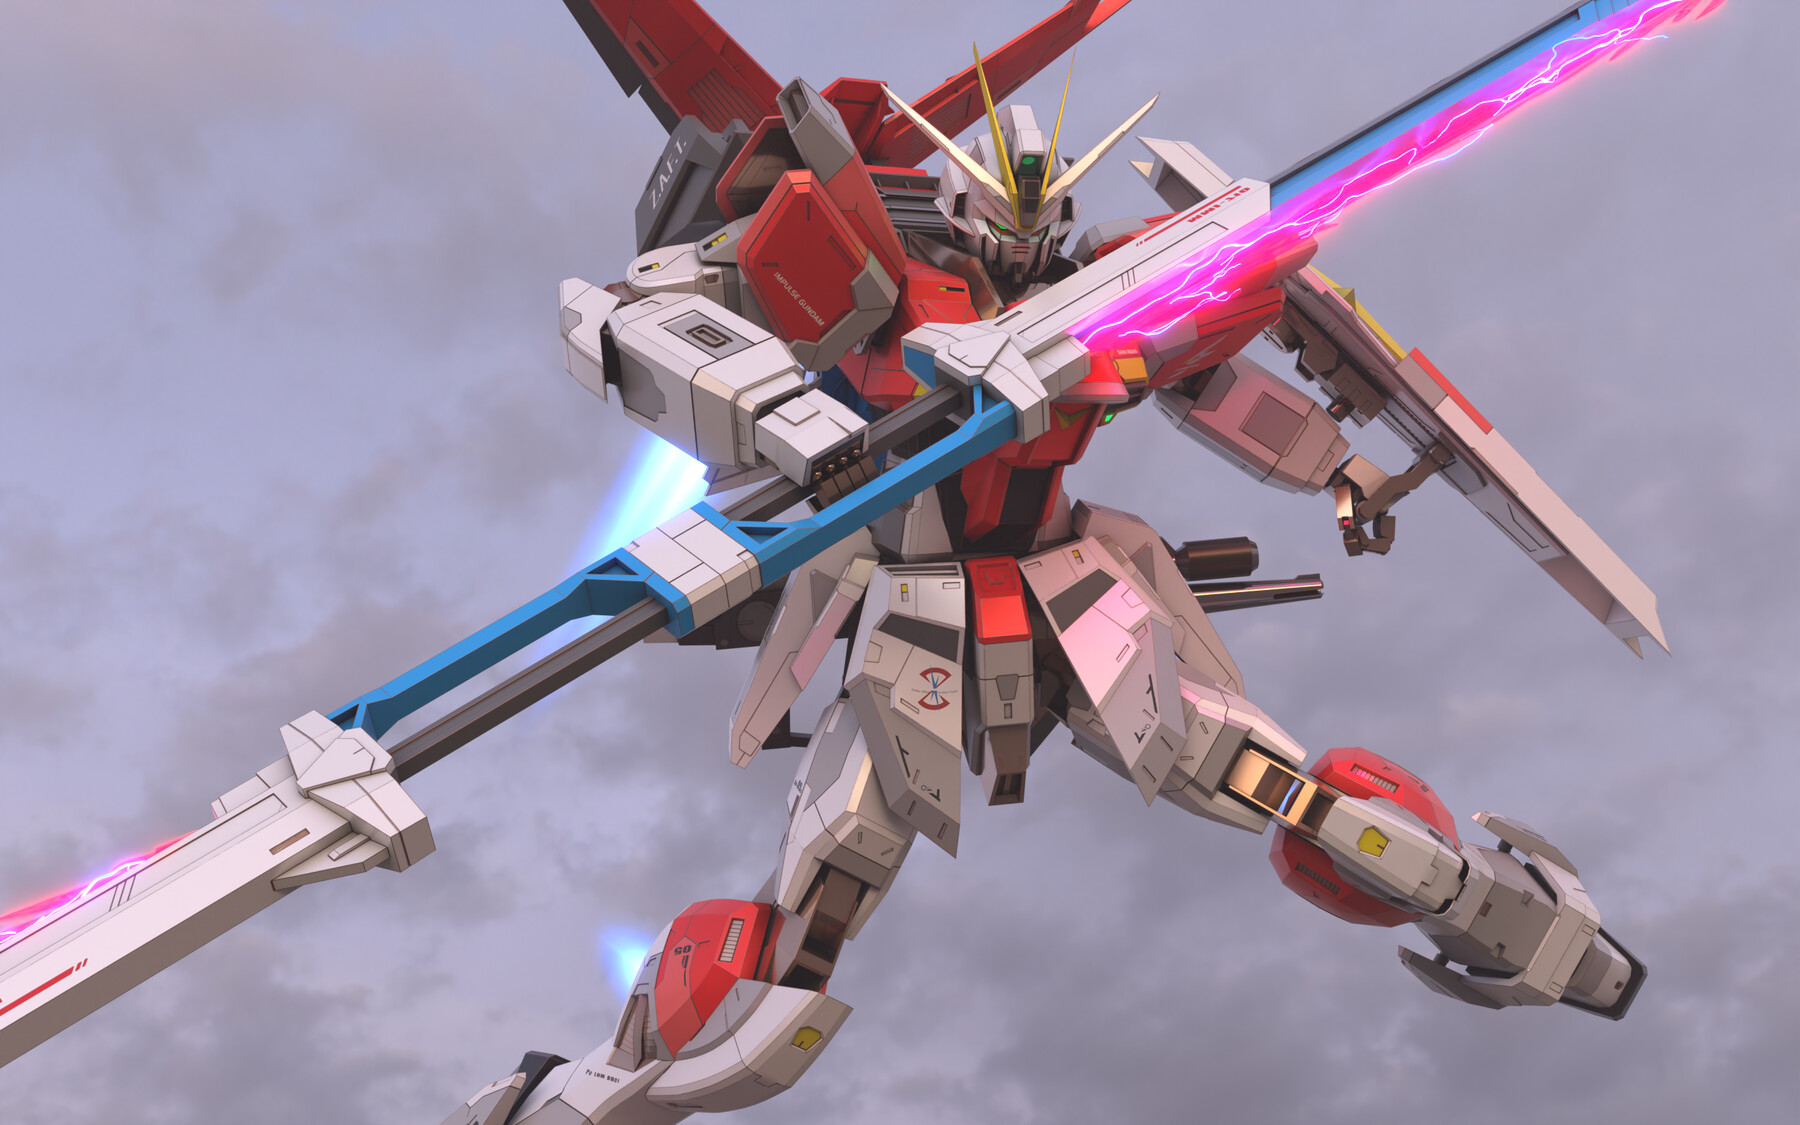 ArtStation - Sword Impulse Gundam Remake - Rigged | Resources